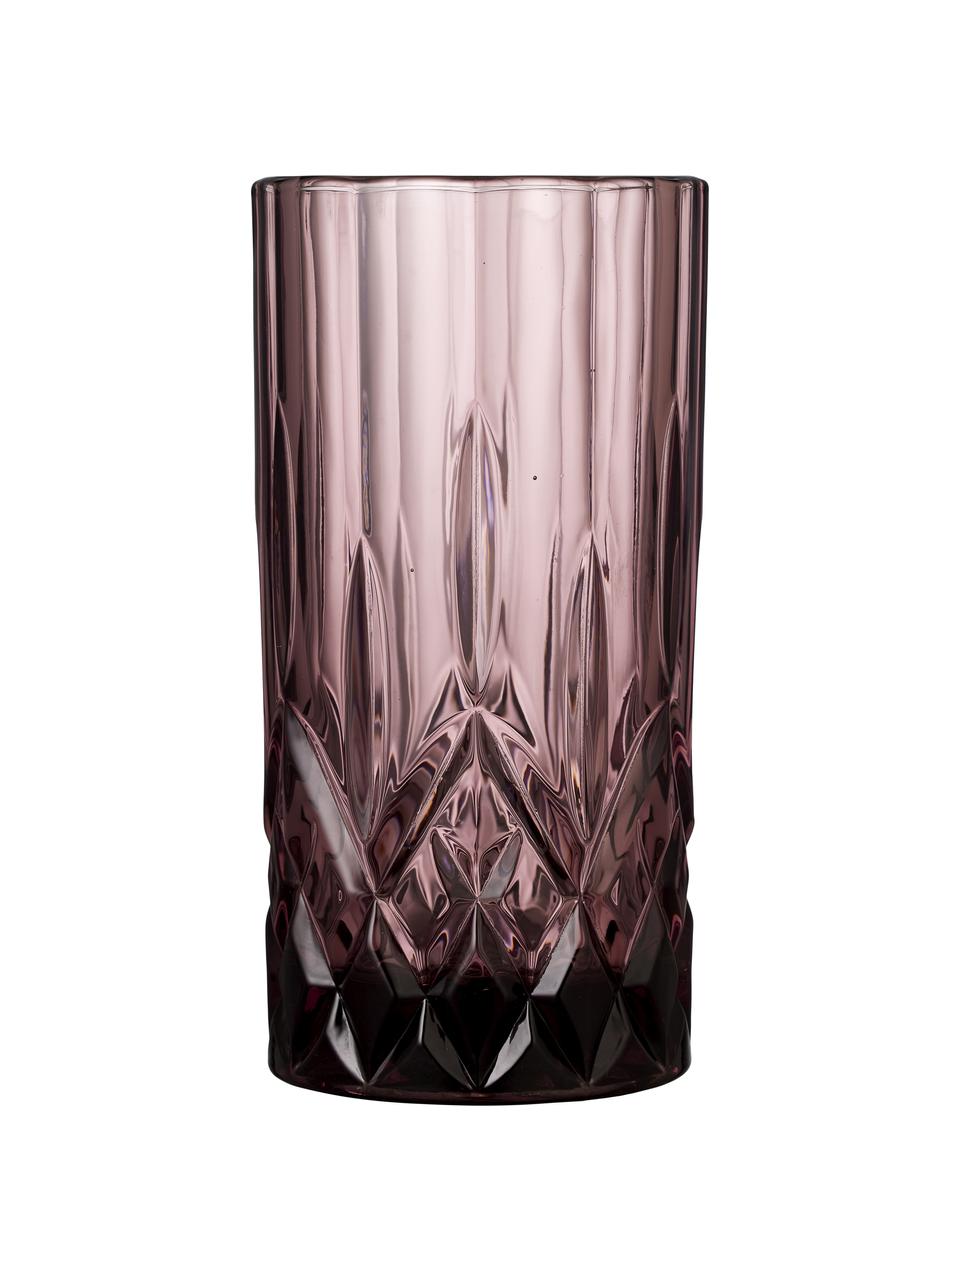 Komplet szklanek Sorrento, 4 elem., Szkło, Wielobarwny, Ø 8 x W 14 cm, 450 ml